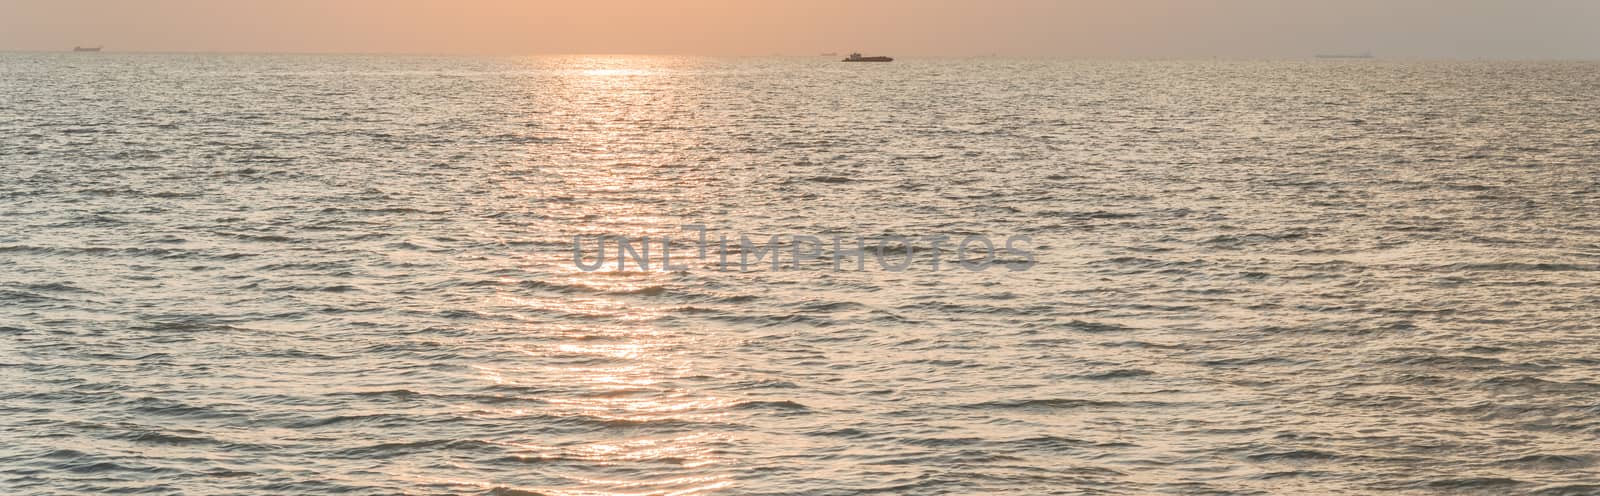 Panoramic view peaceful scene of sunset on the beach of Melaka, Malaysia by trongnguyen